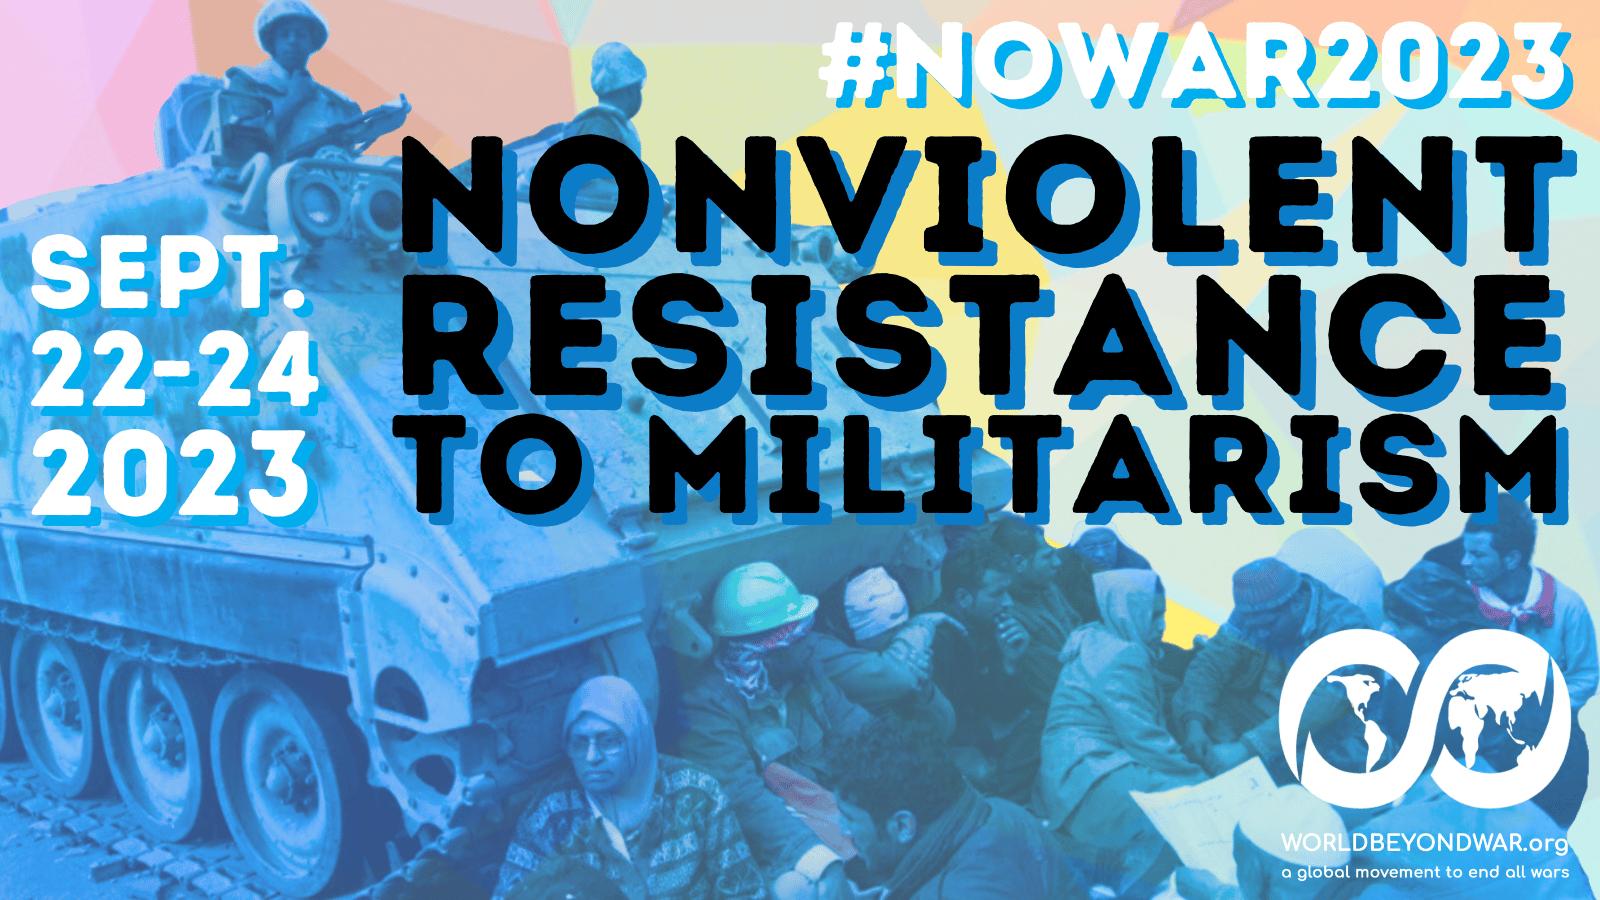 #nowar2023 nonviolent resistance to militarism